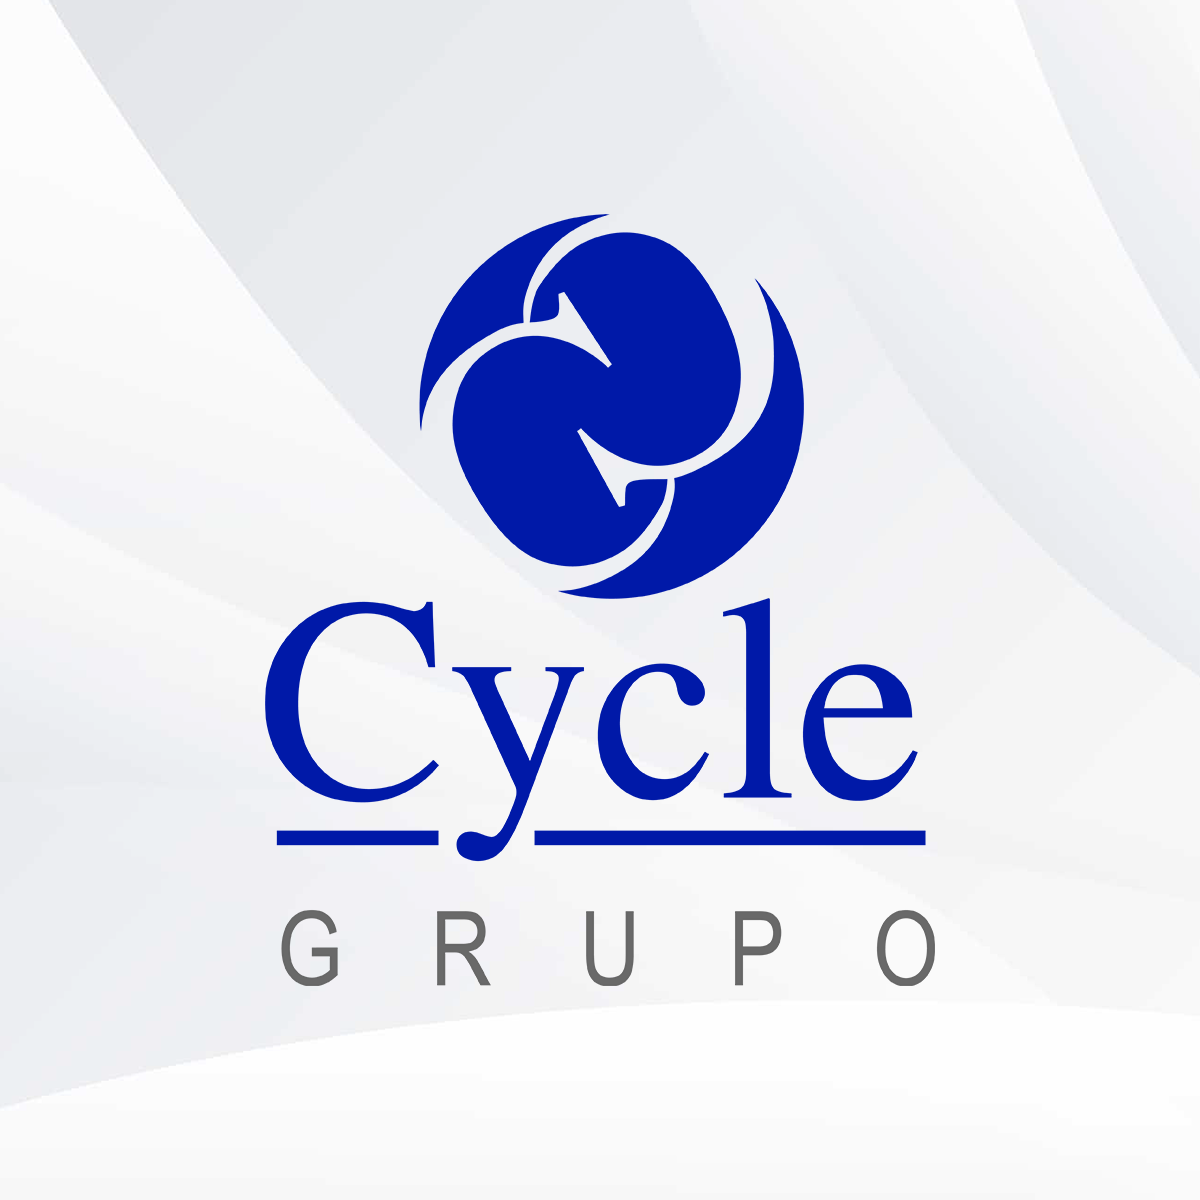 (c) Cyclegrupo.com